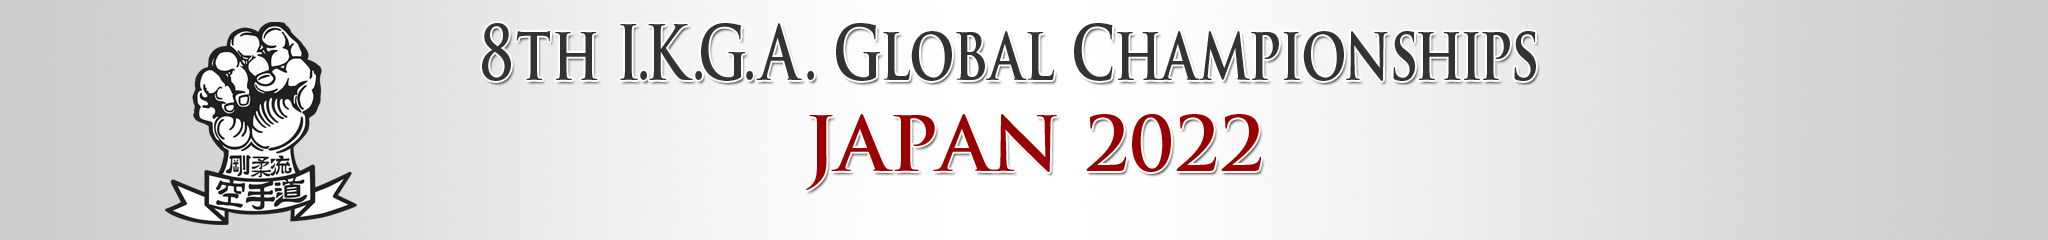 8th IKGA Global Championships - Postponed